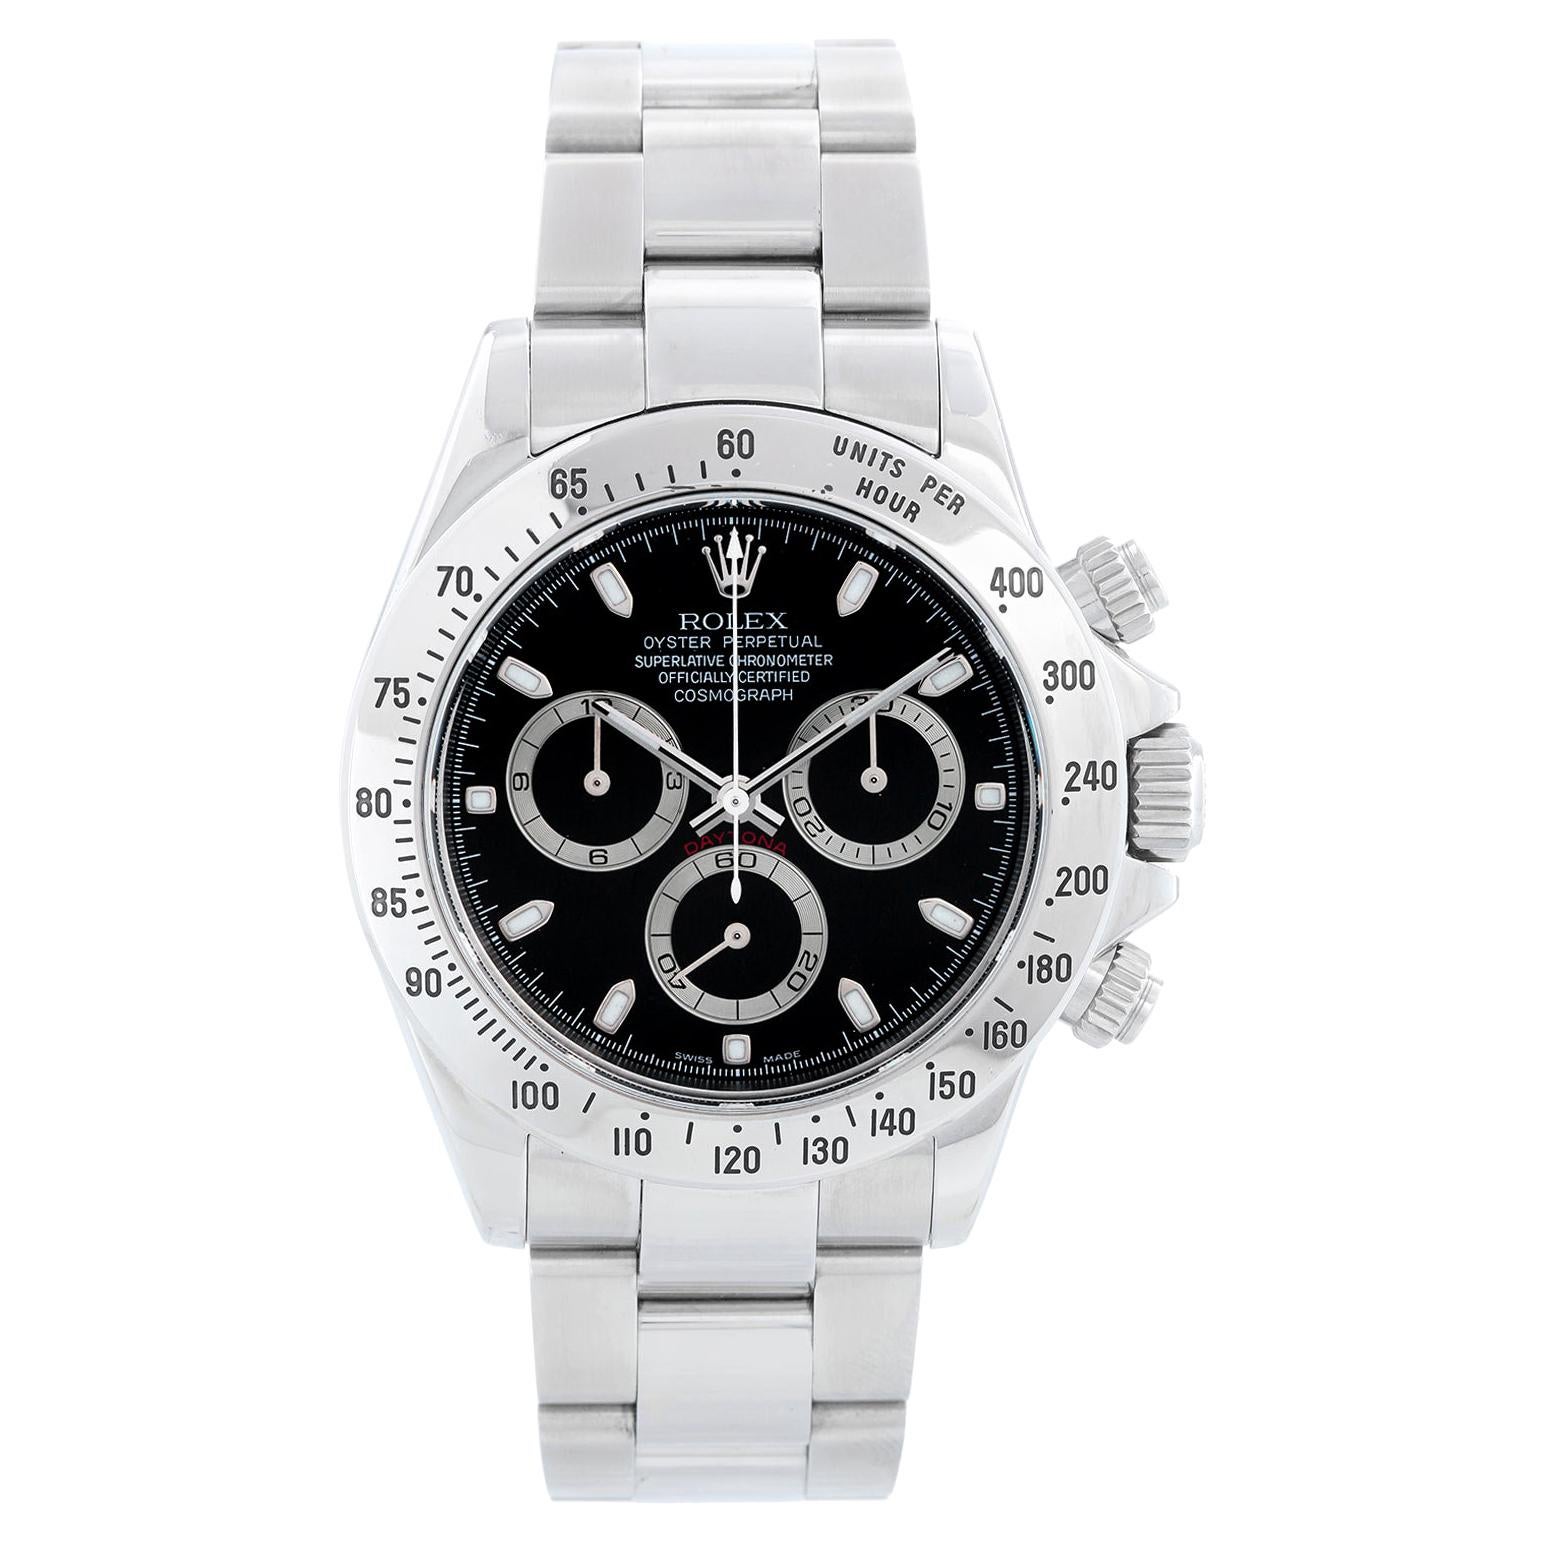 Rolex Daytona Chronograph Function Men's Stainless Steel Watch 116520